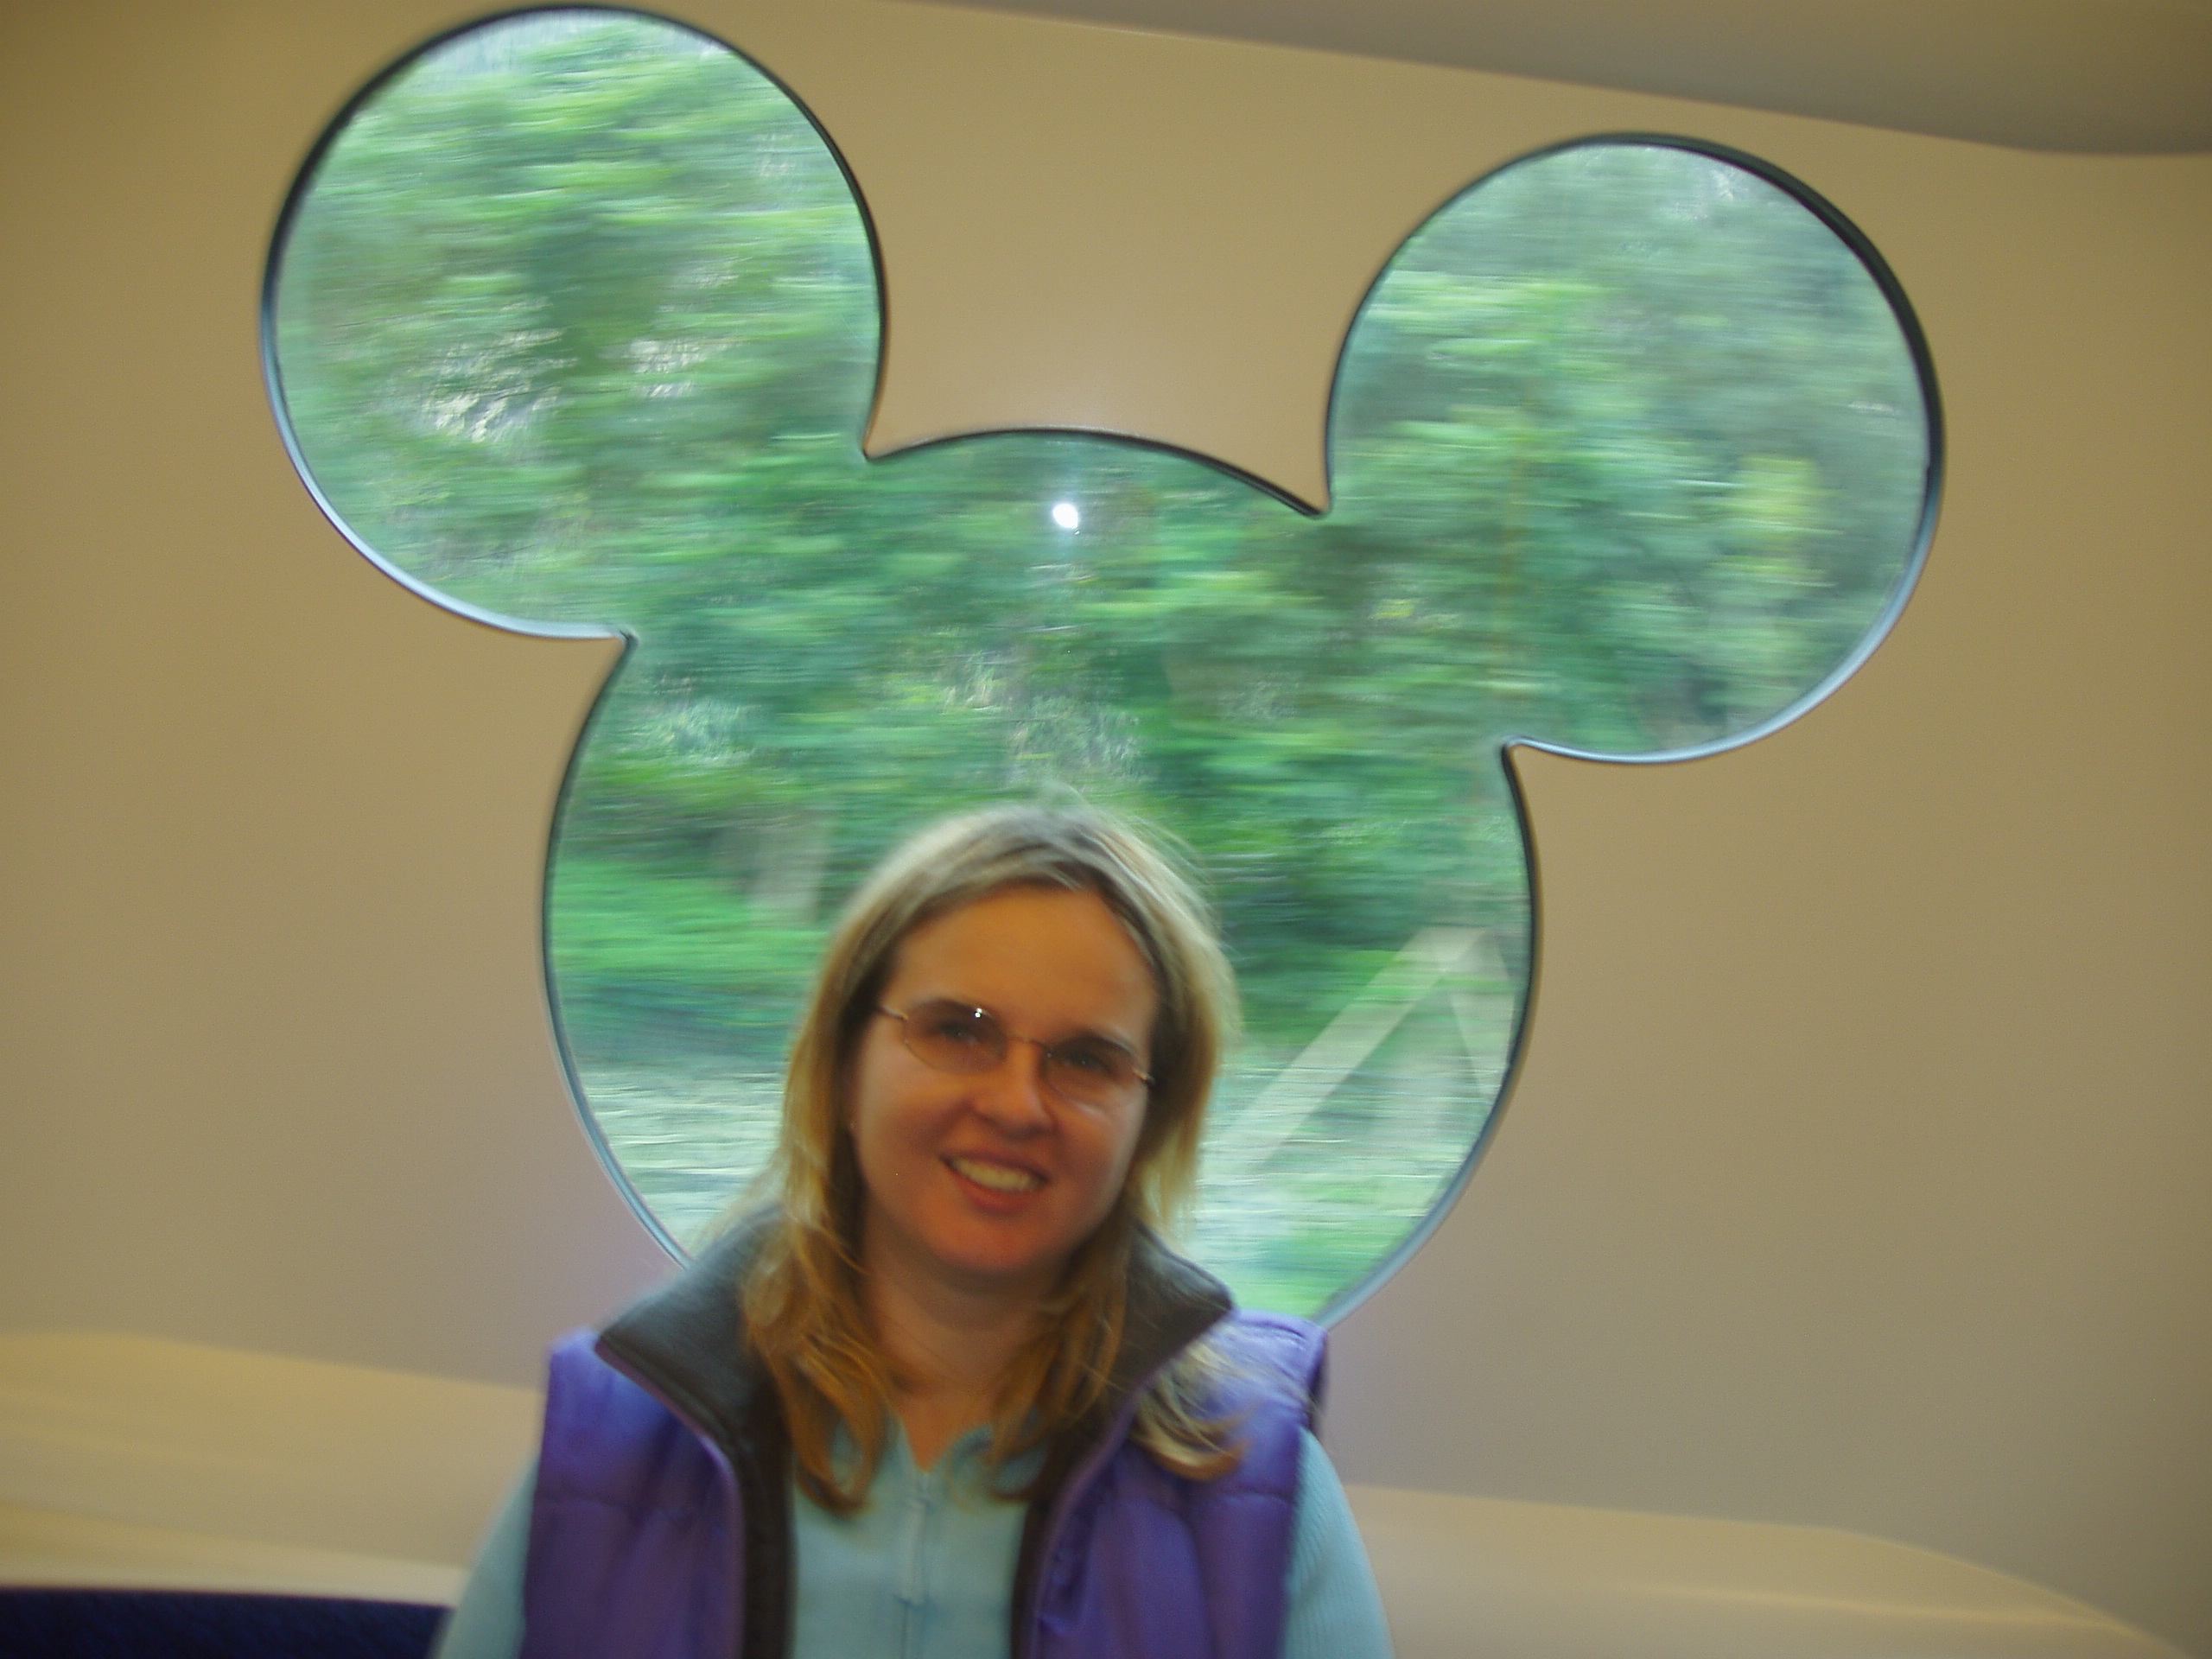 Taking the train to Disney Hong Kong